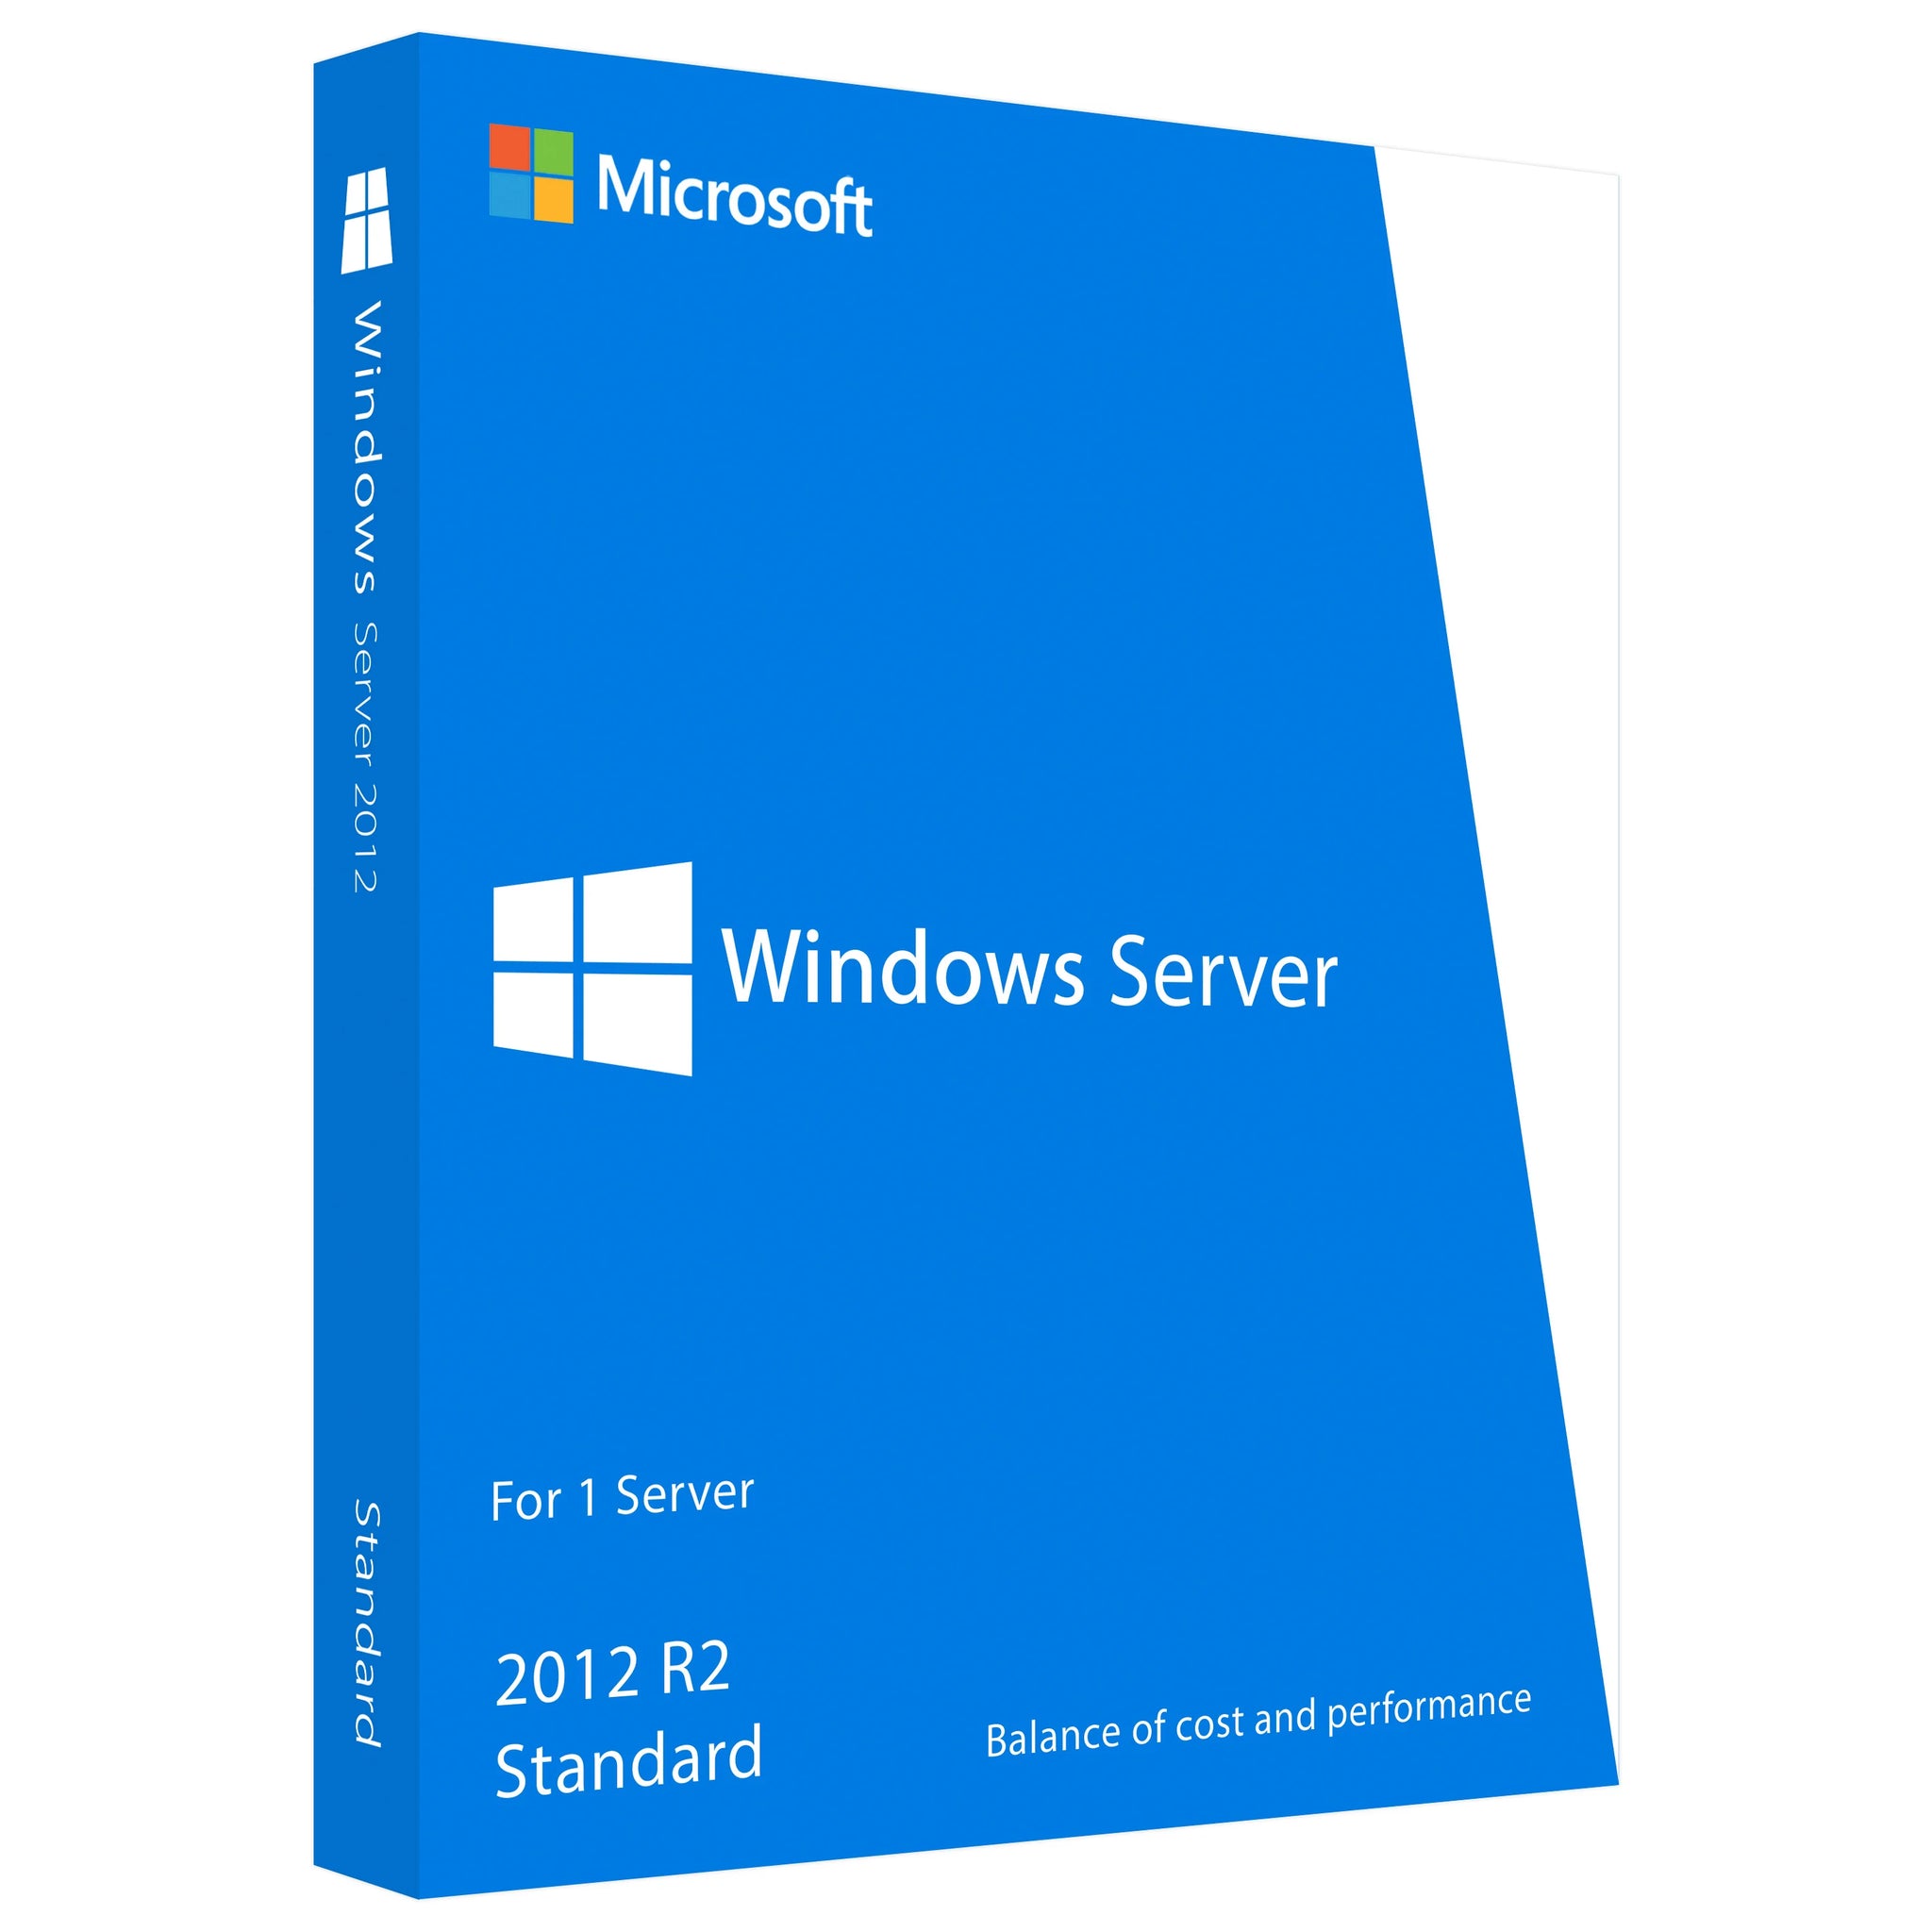 Microsoft Windows Server 2012 R2 Standard - Lifetime License Key